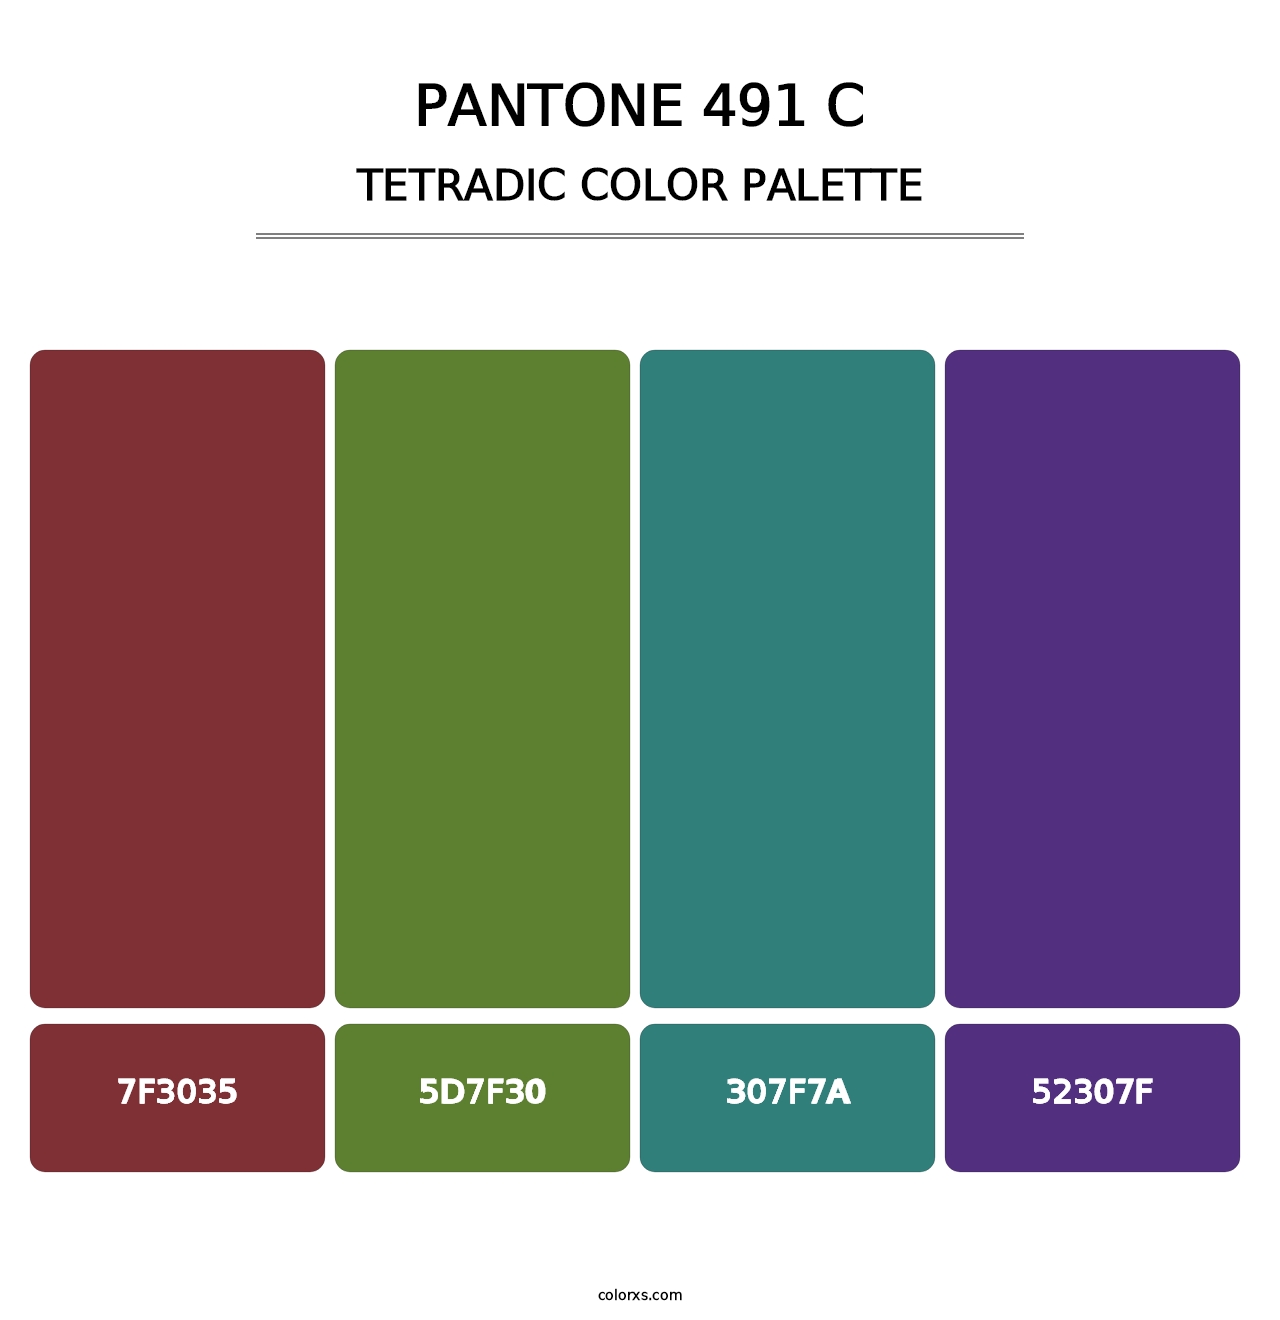 PANTONE 491 C - Tetradic Color Palette